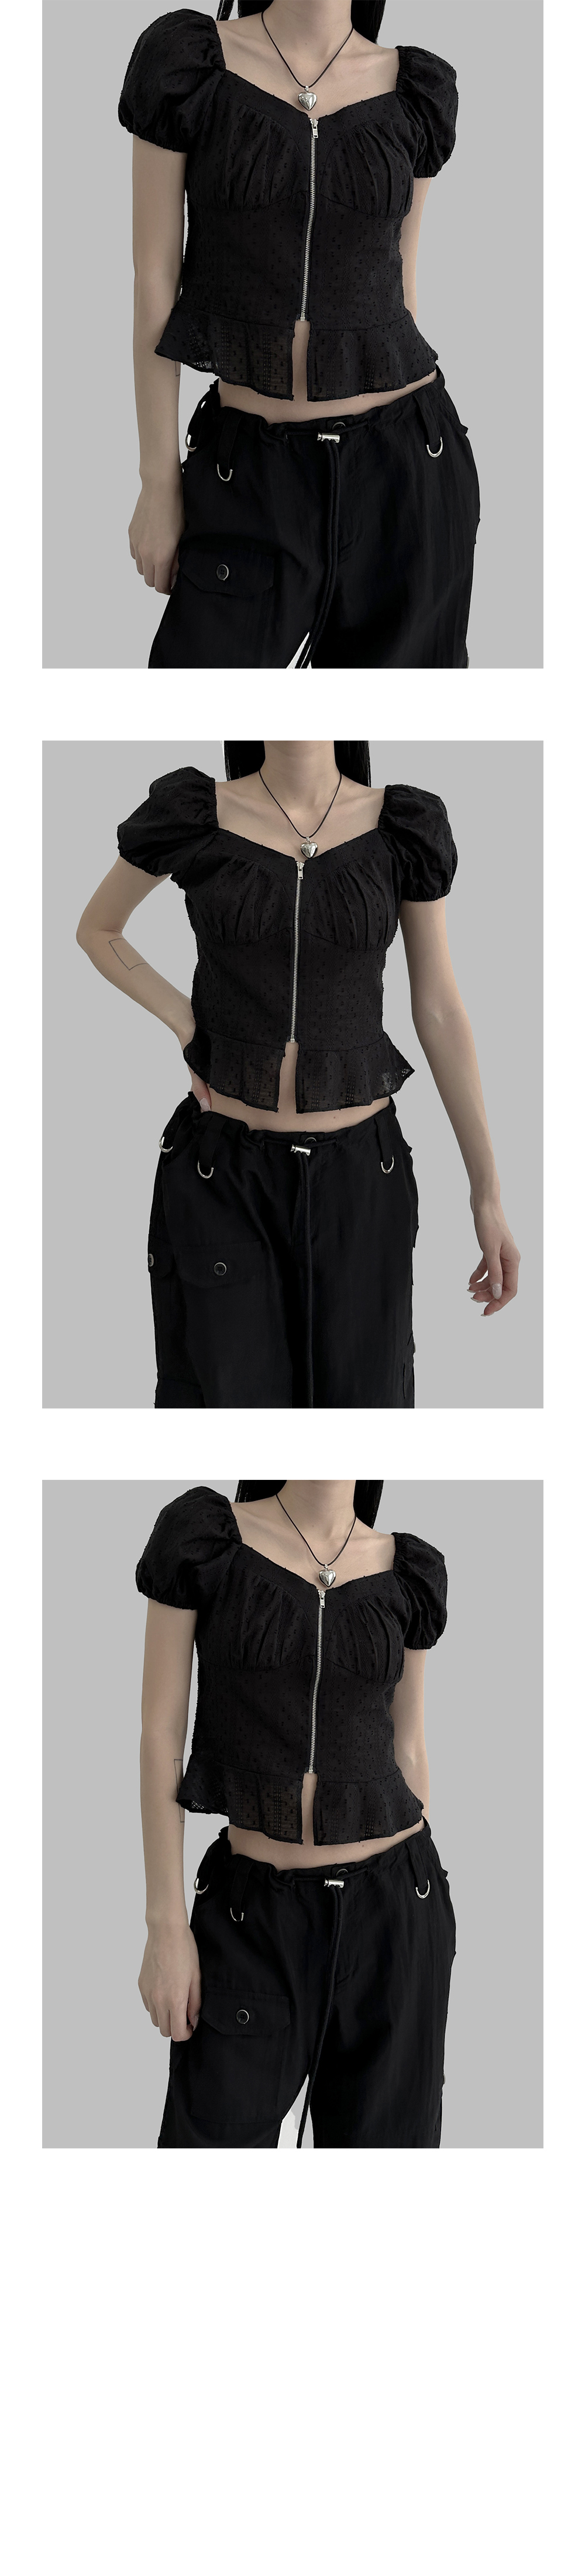 suspenders skirt/pants charcoal color image-S1L18